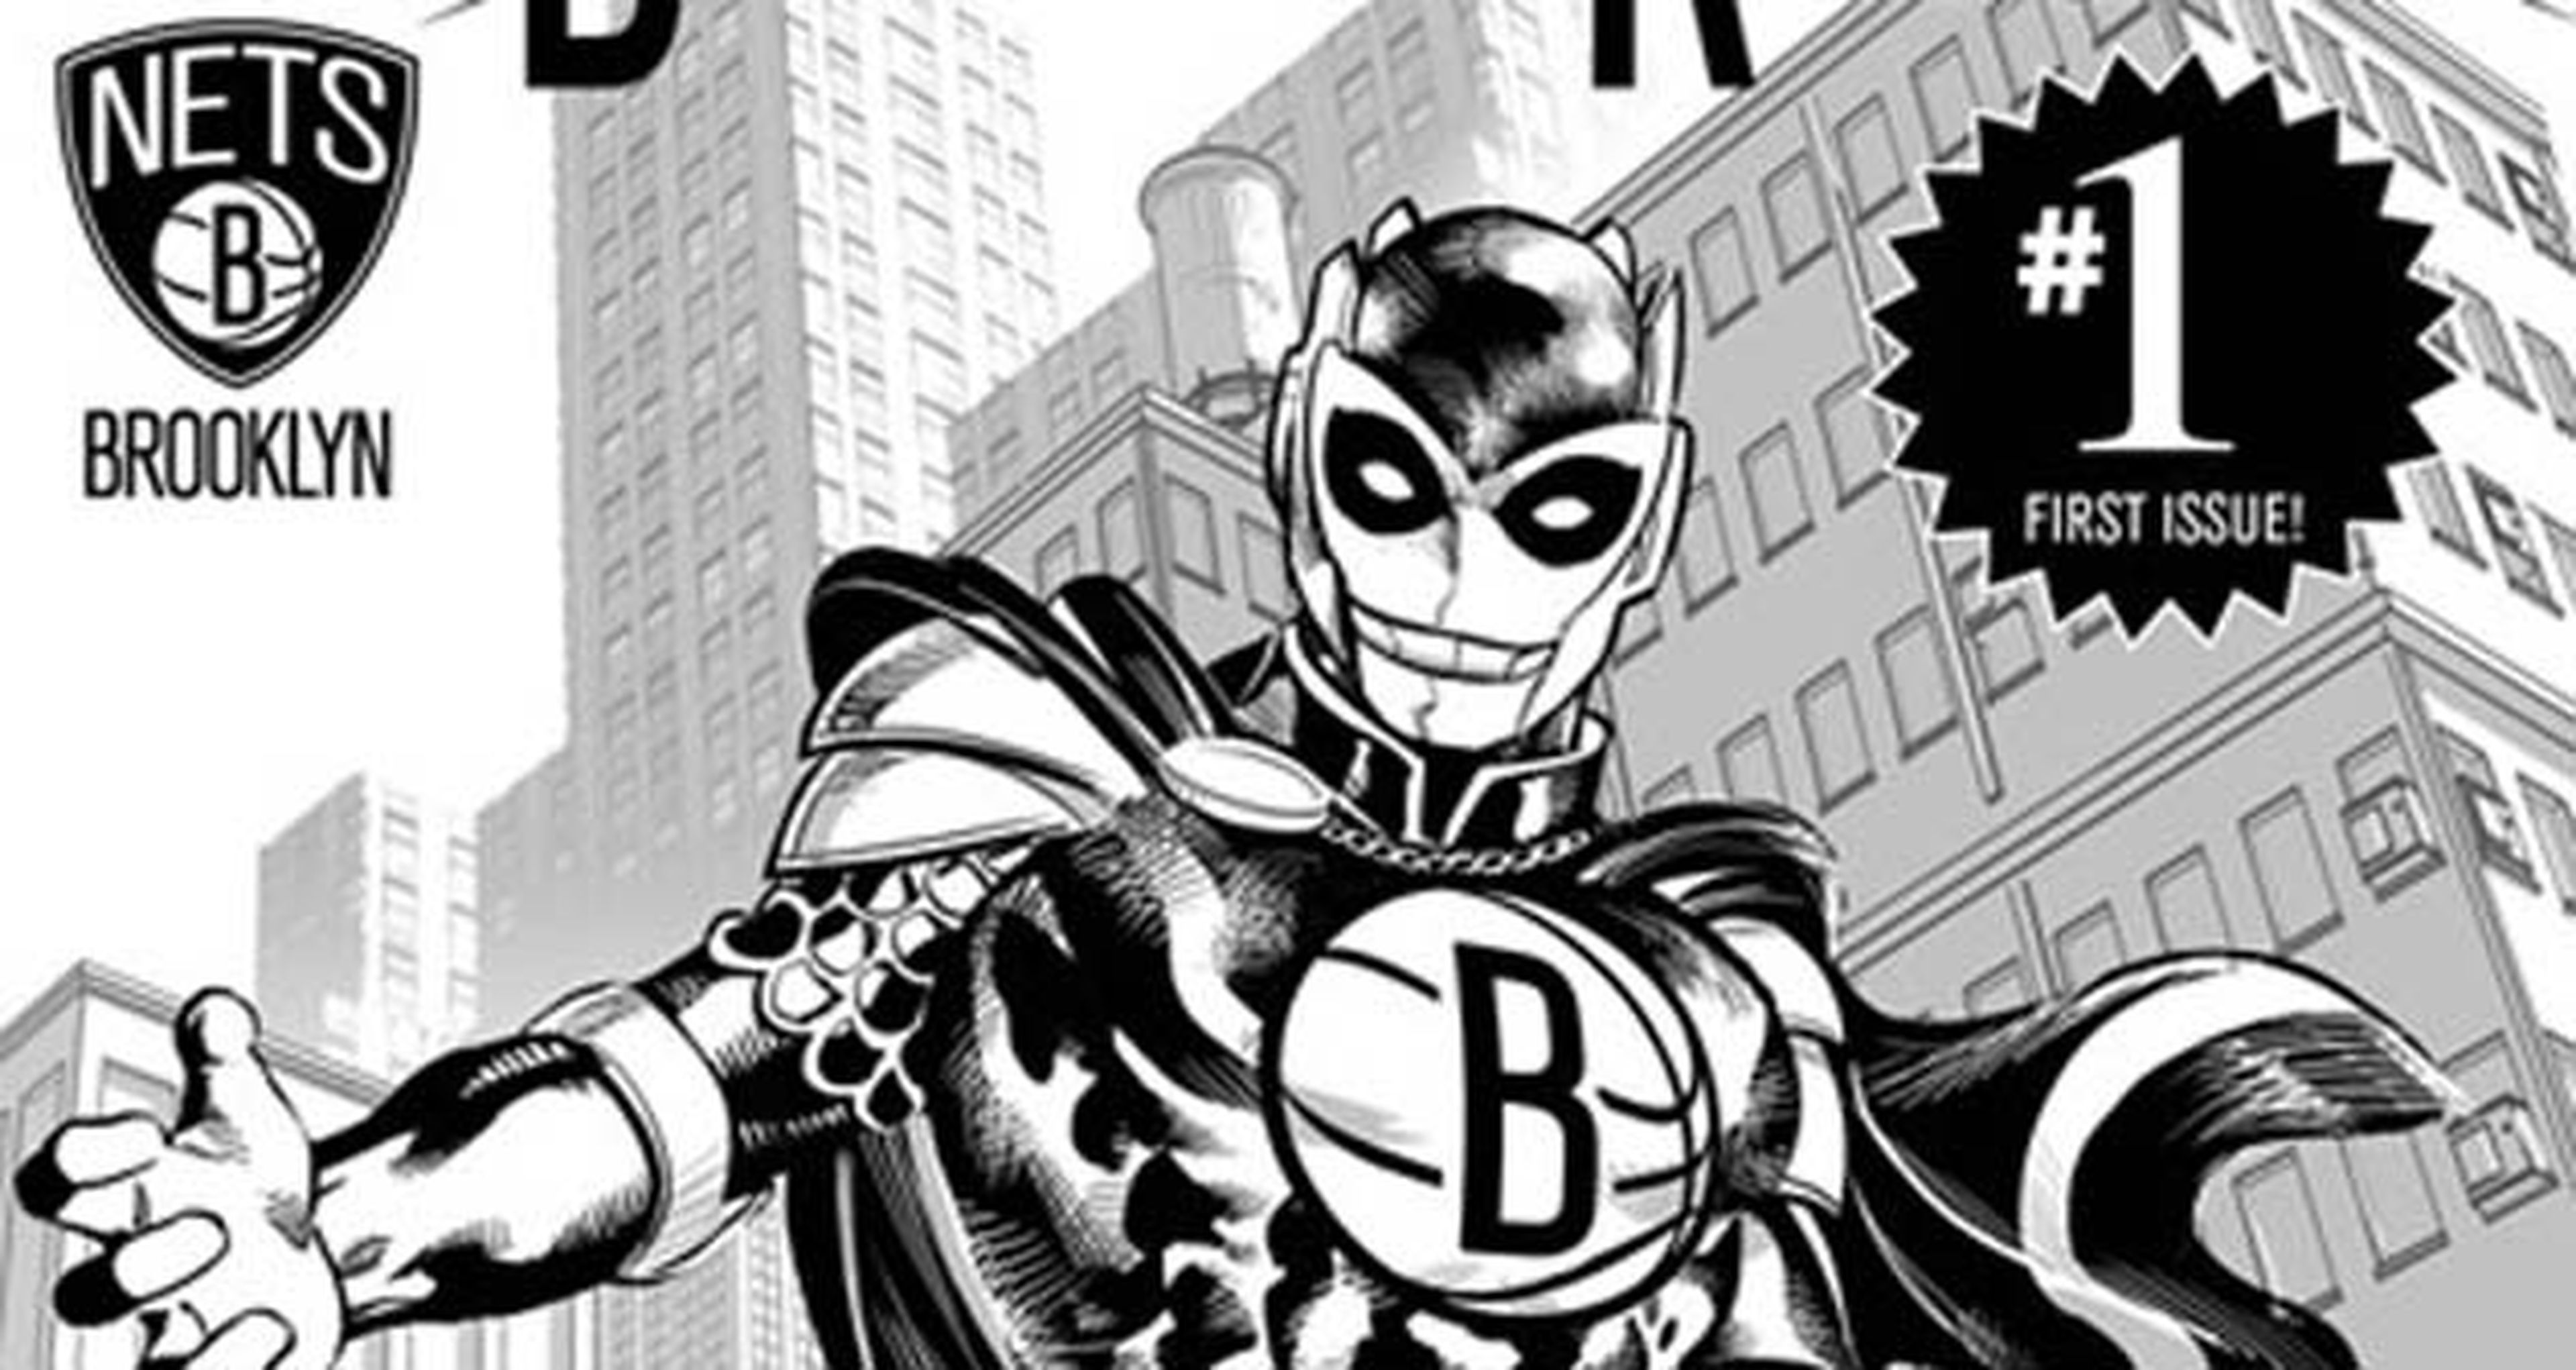 BrooklyKnight  Marvel lança HQ com super-herói de equipe de basquete  nova-iorquina